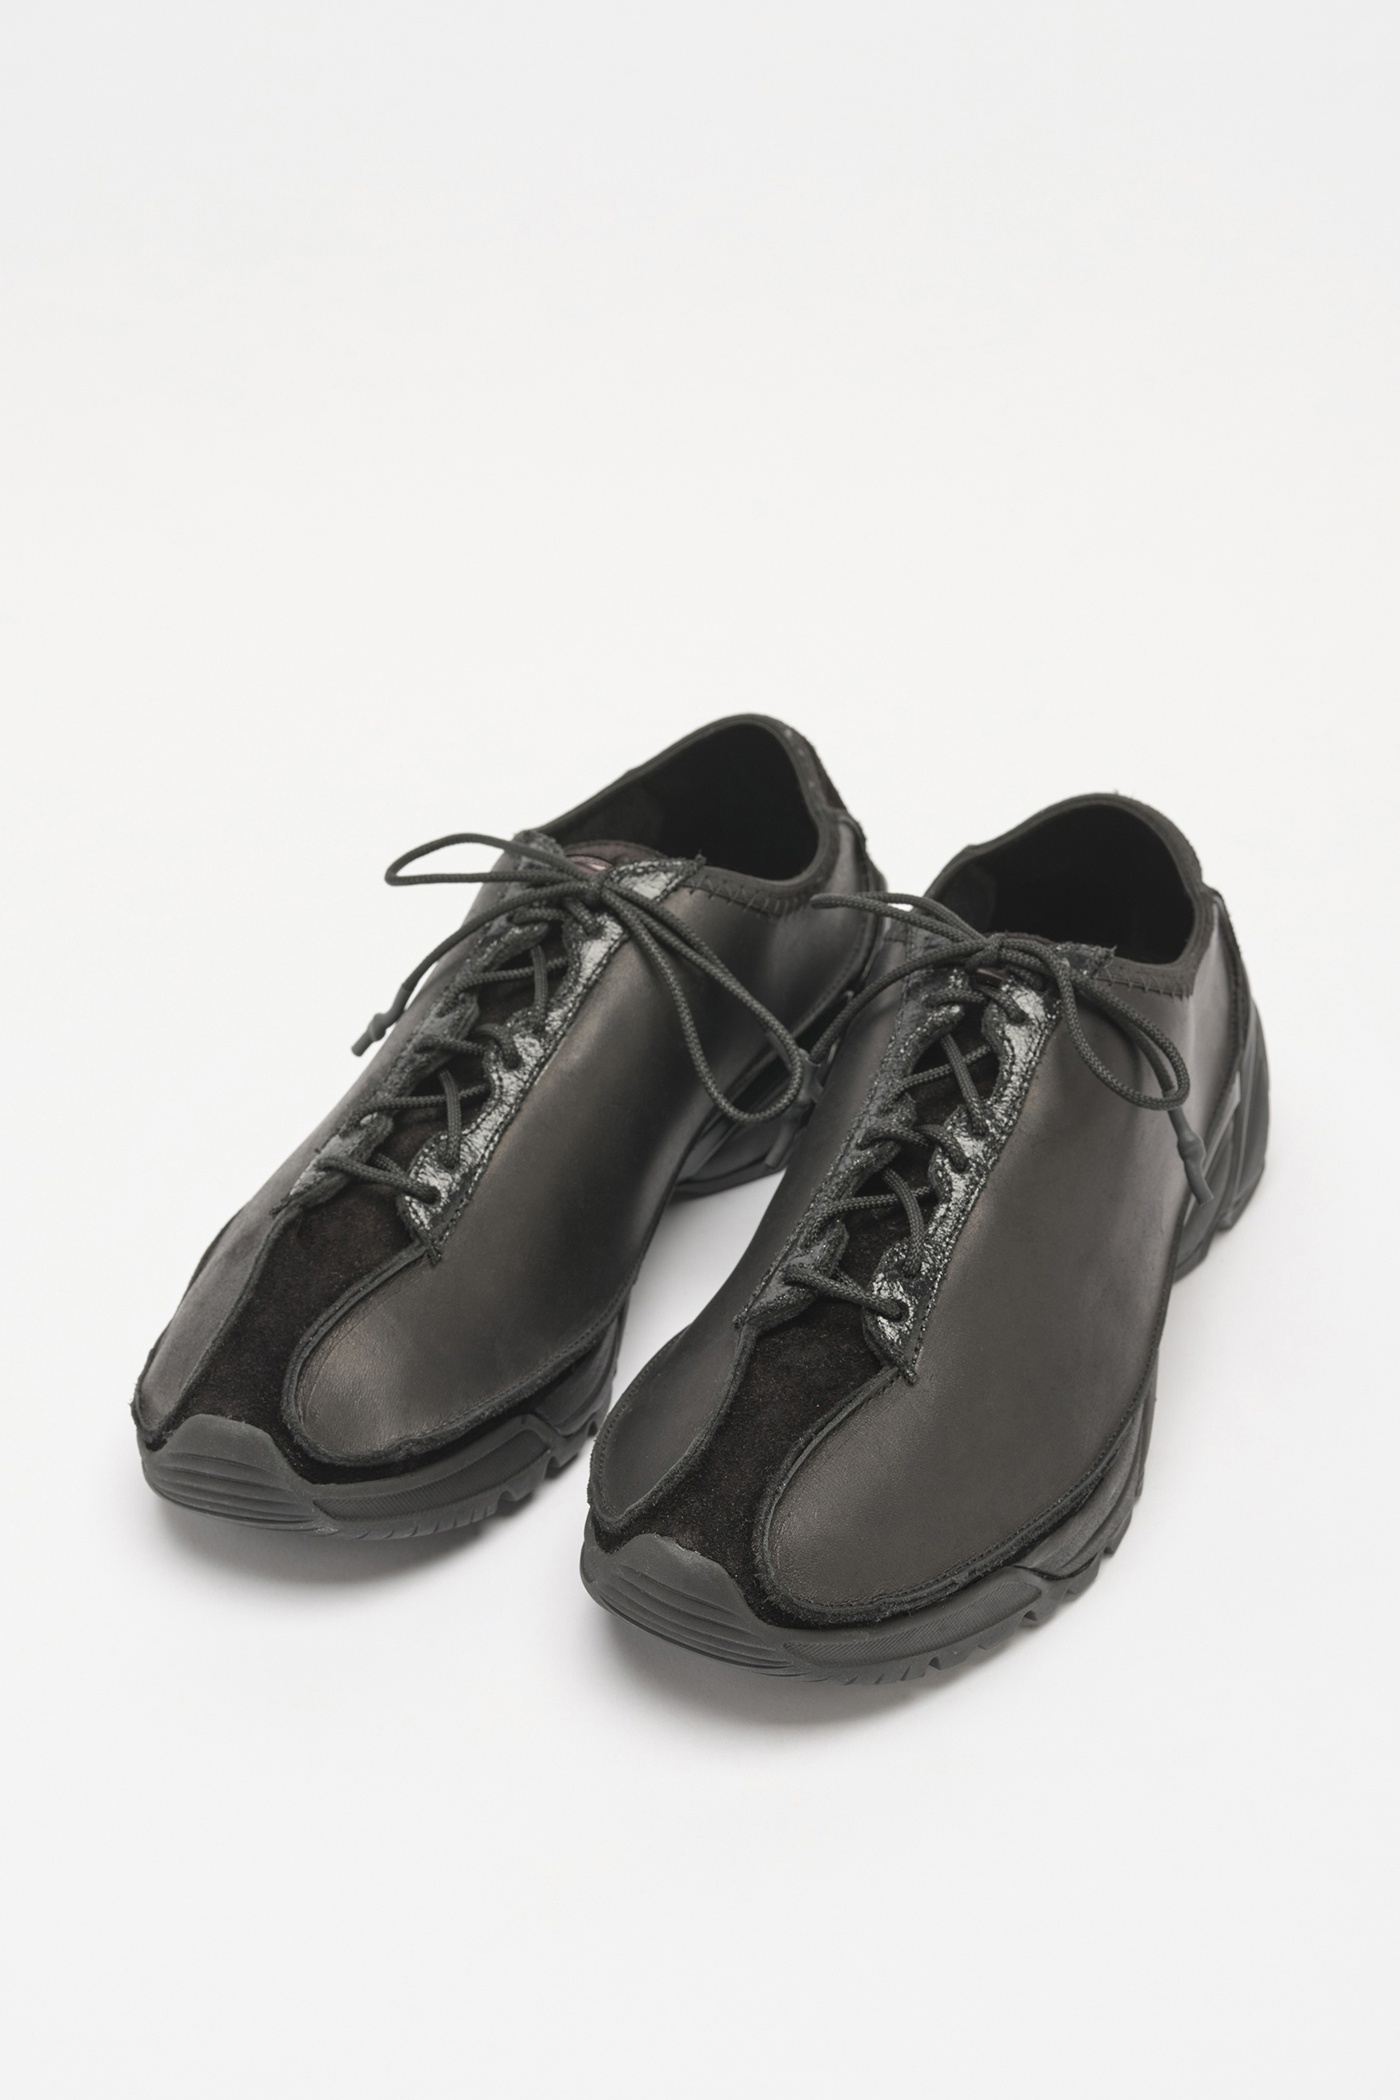 Klove Black Leather - 7